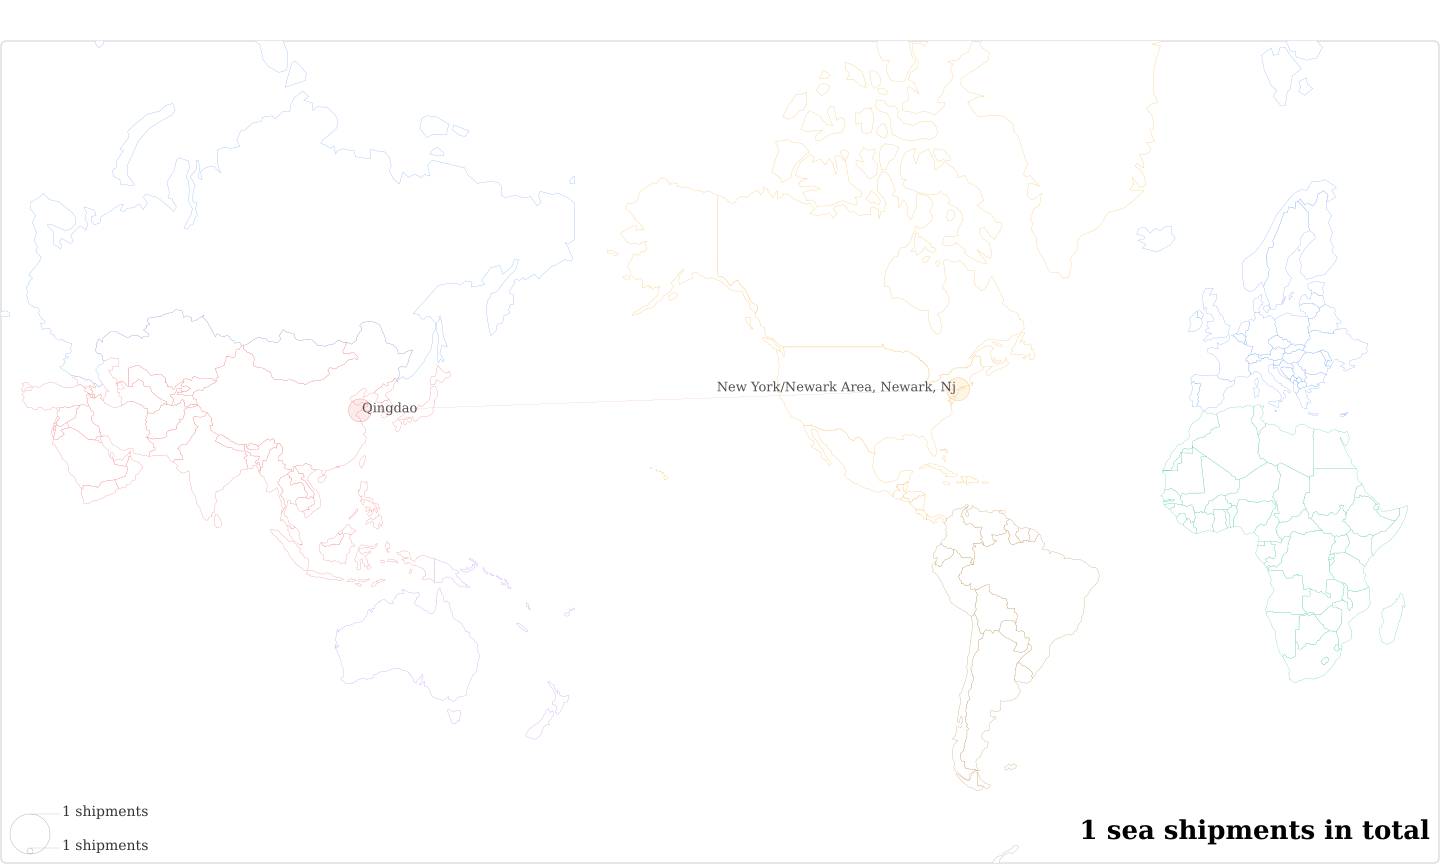 Jeffrey Morzella's Imports Per Country Map